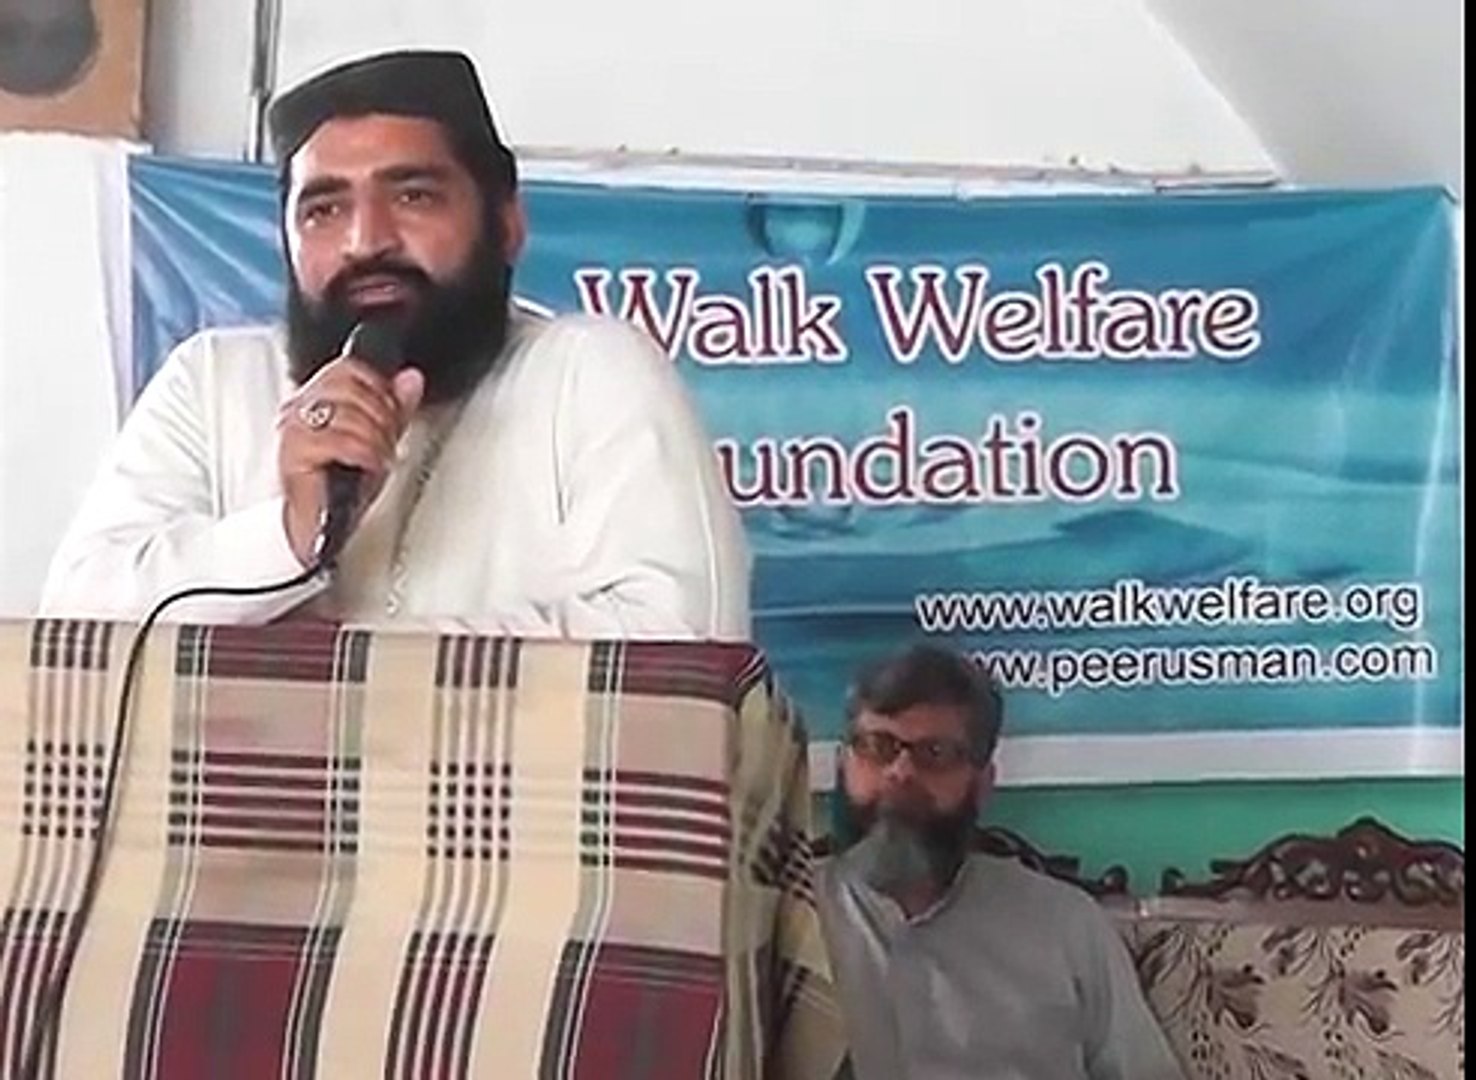 Chairman Walk Weelfare Foundation-non profit organization, Peer Usman Ghani Speech